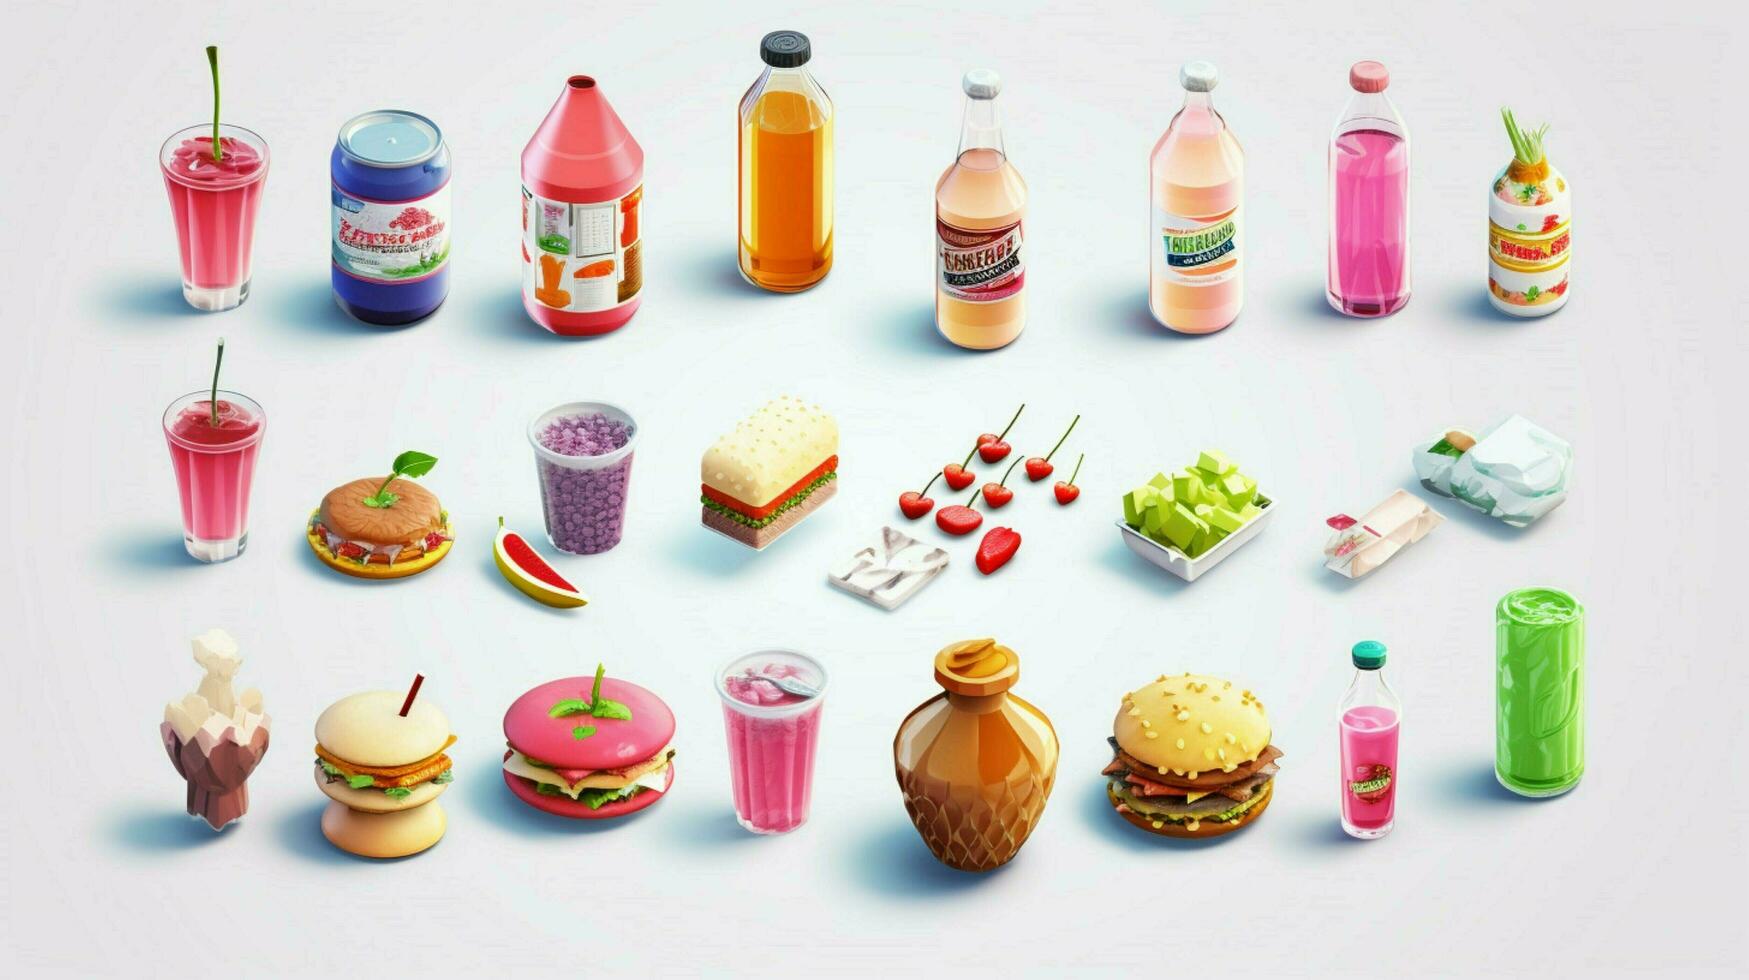 colorida 3d ícone conjuntos do Comida e bebida indust foto